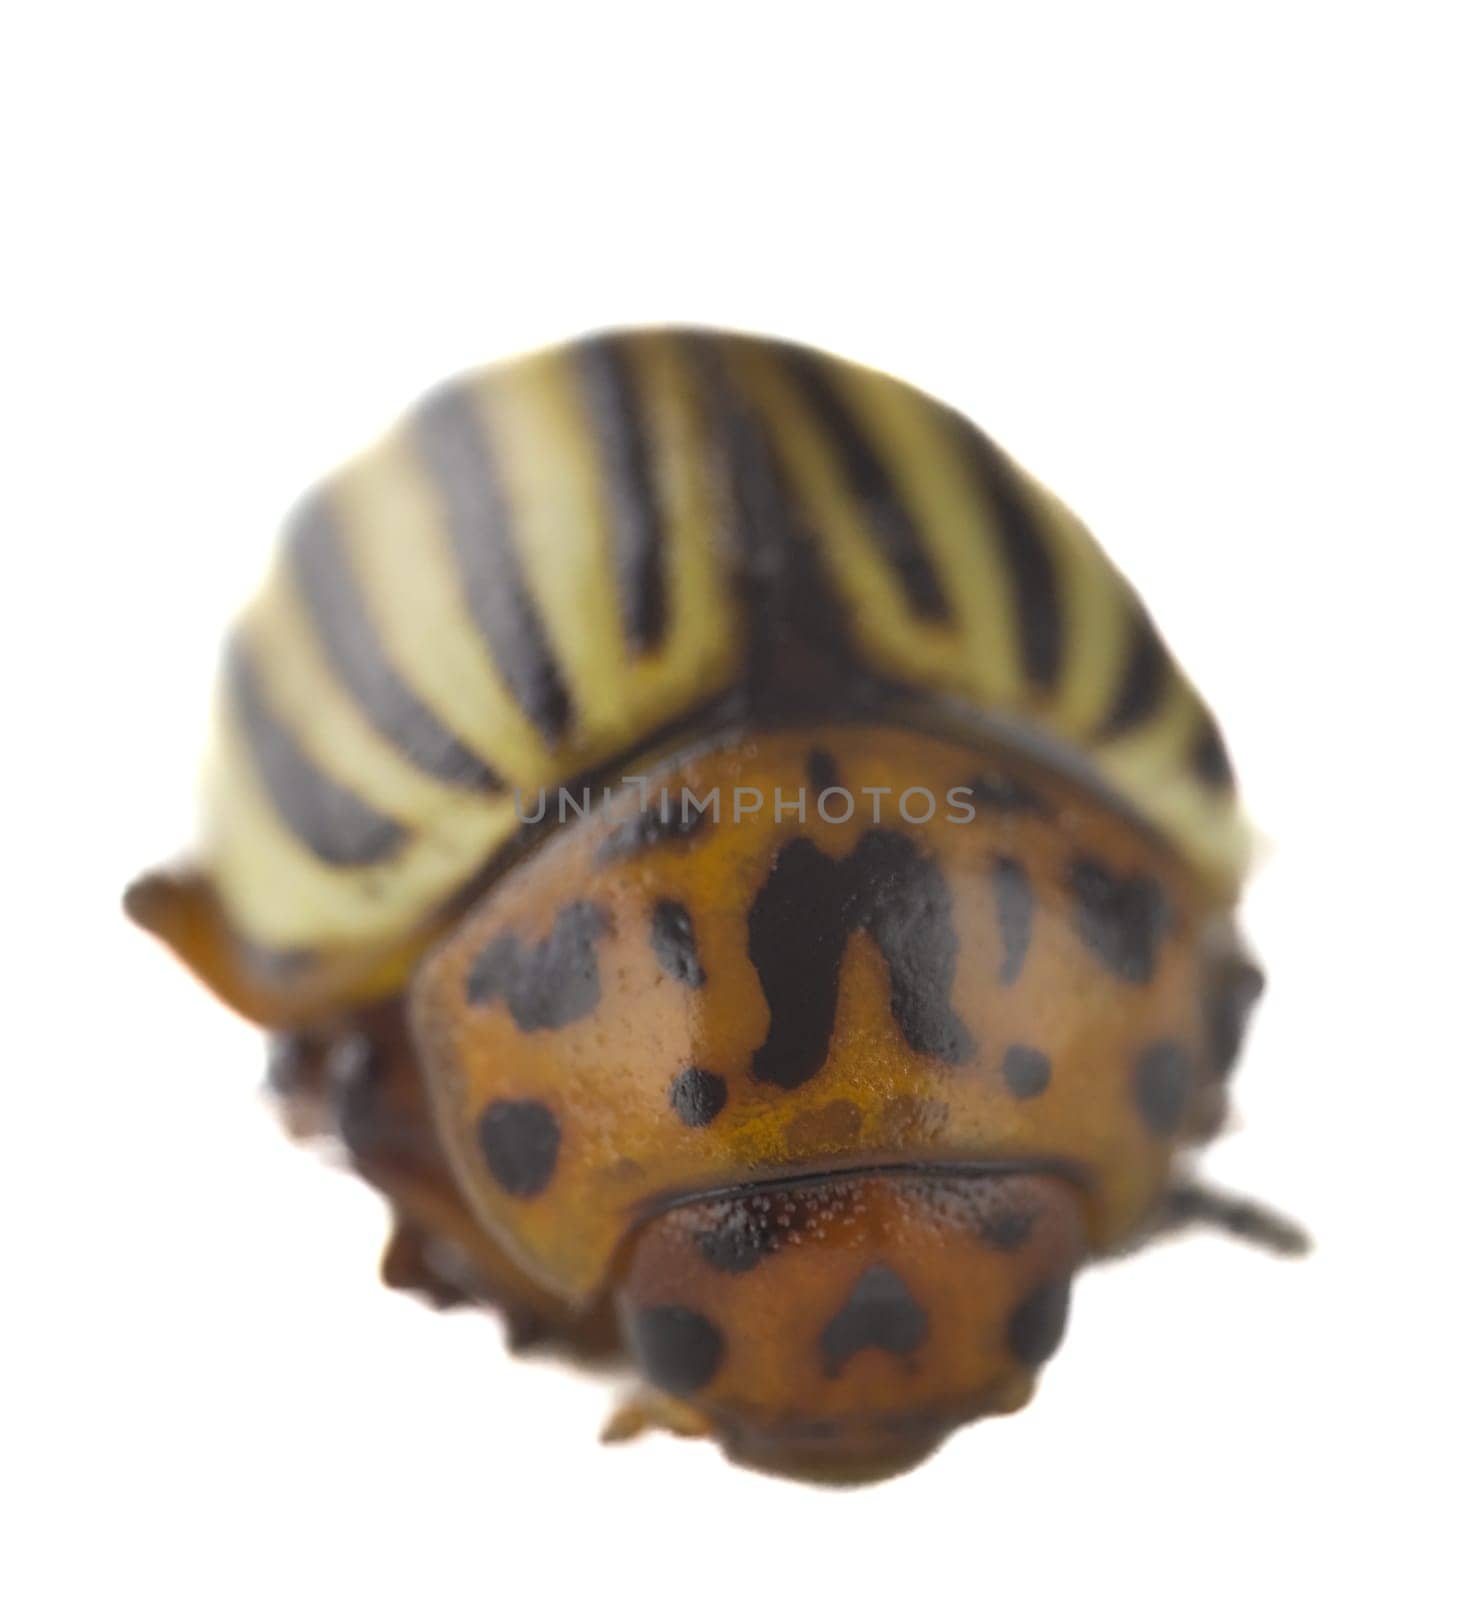 Colorado potato beetle close-up on a white background